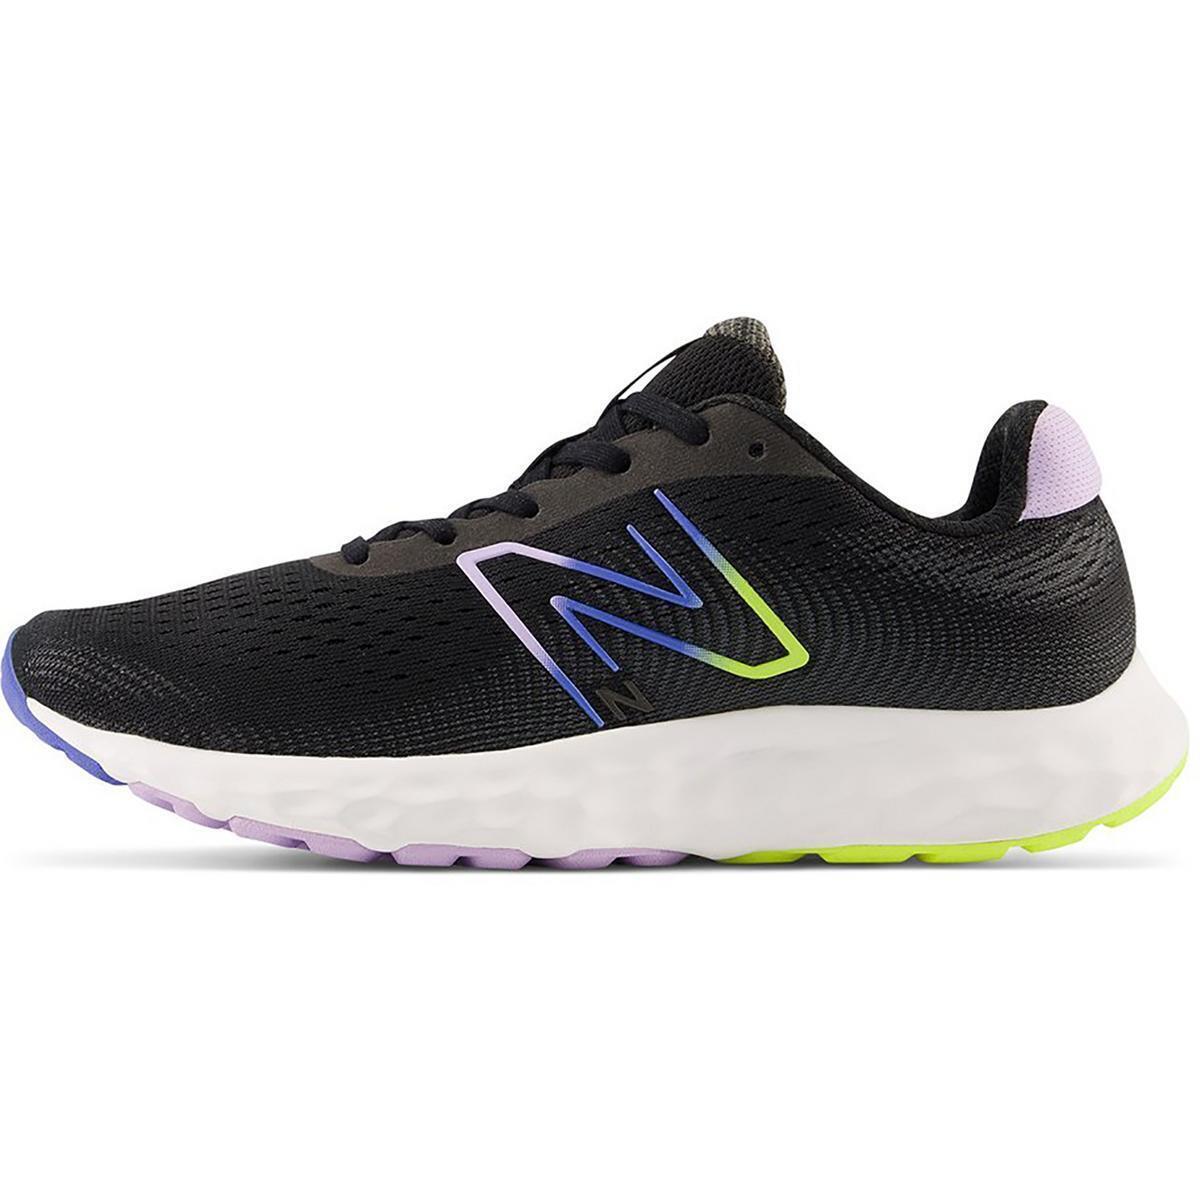 New Balance Womens 520 V8 Fitness Running Training Shoes Sneakers Bhfo 3857 - Black/Purple